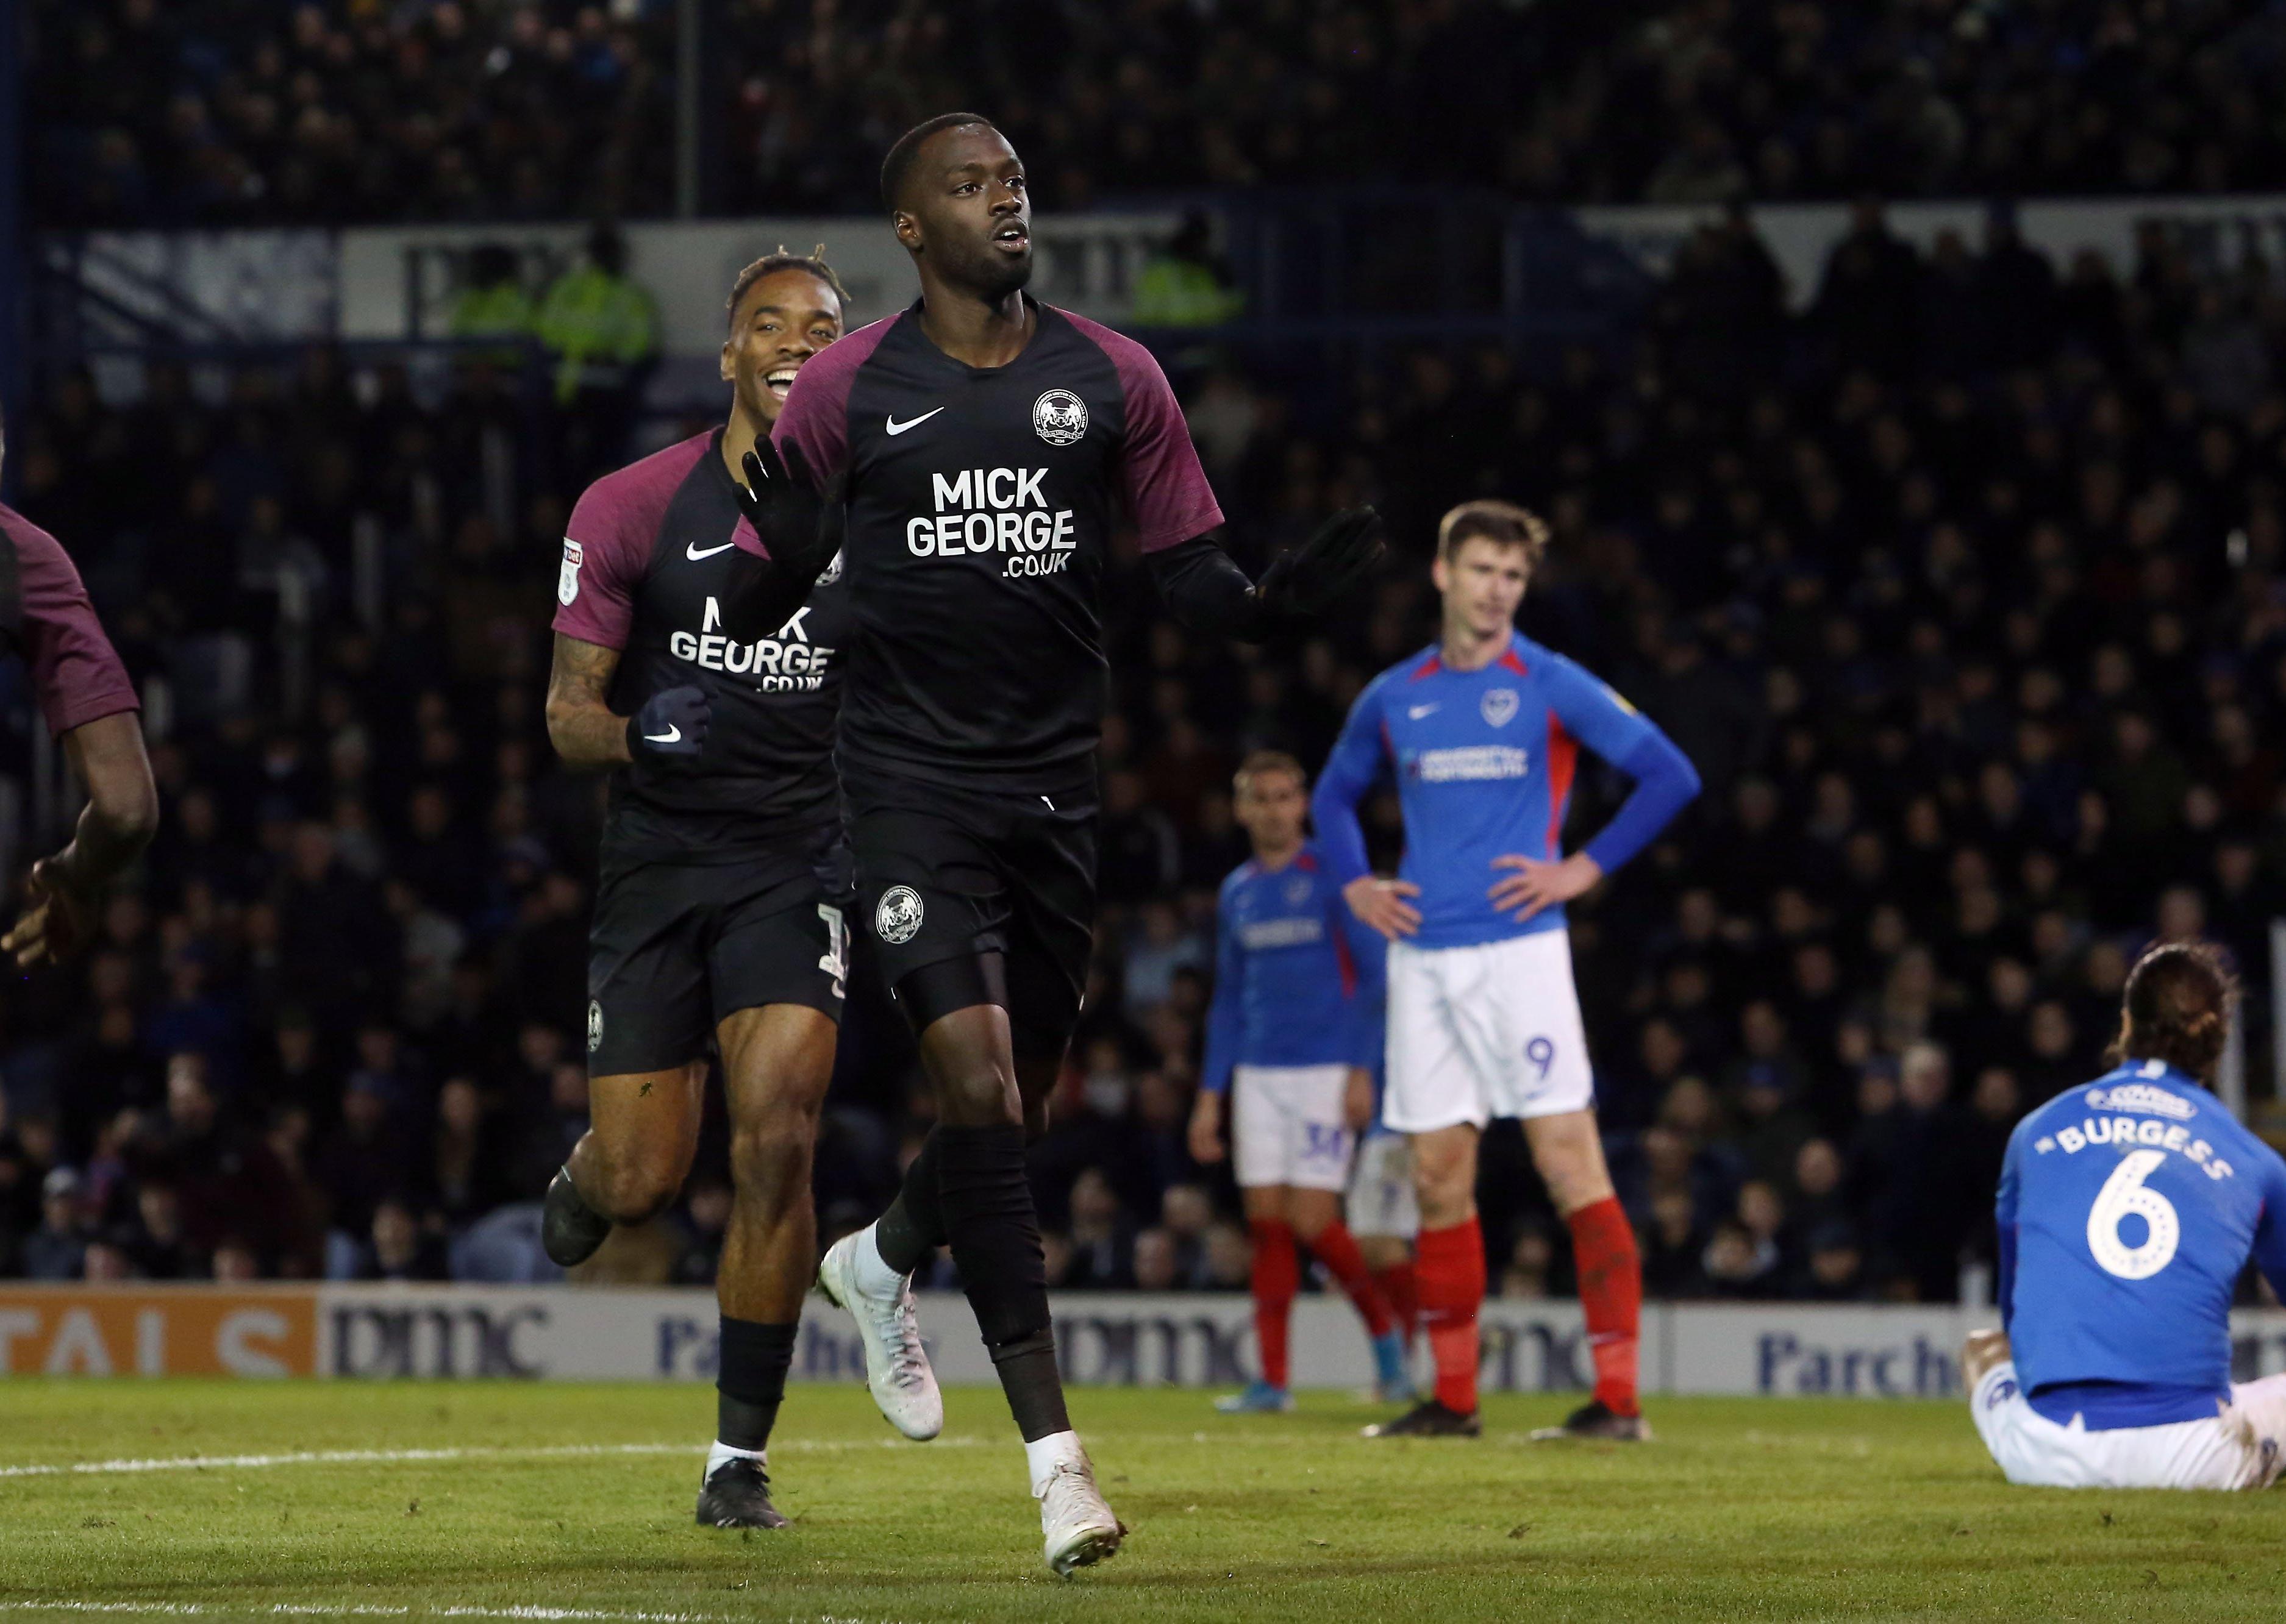 Mohamed Eisa of Peterborough United celebrates scoring his goal at Portsmouth. Photo: Joe Dent/theposh.com.